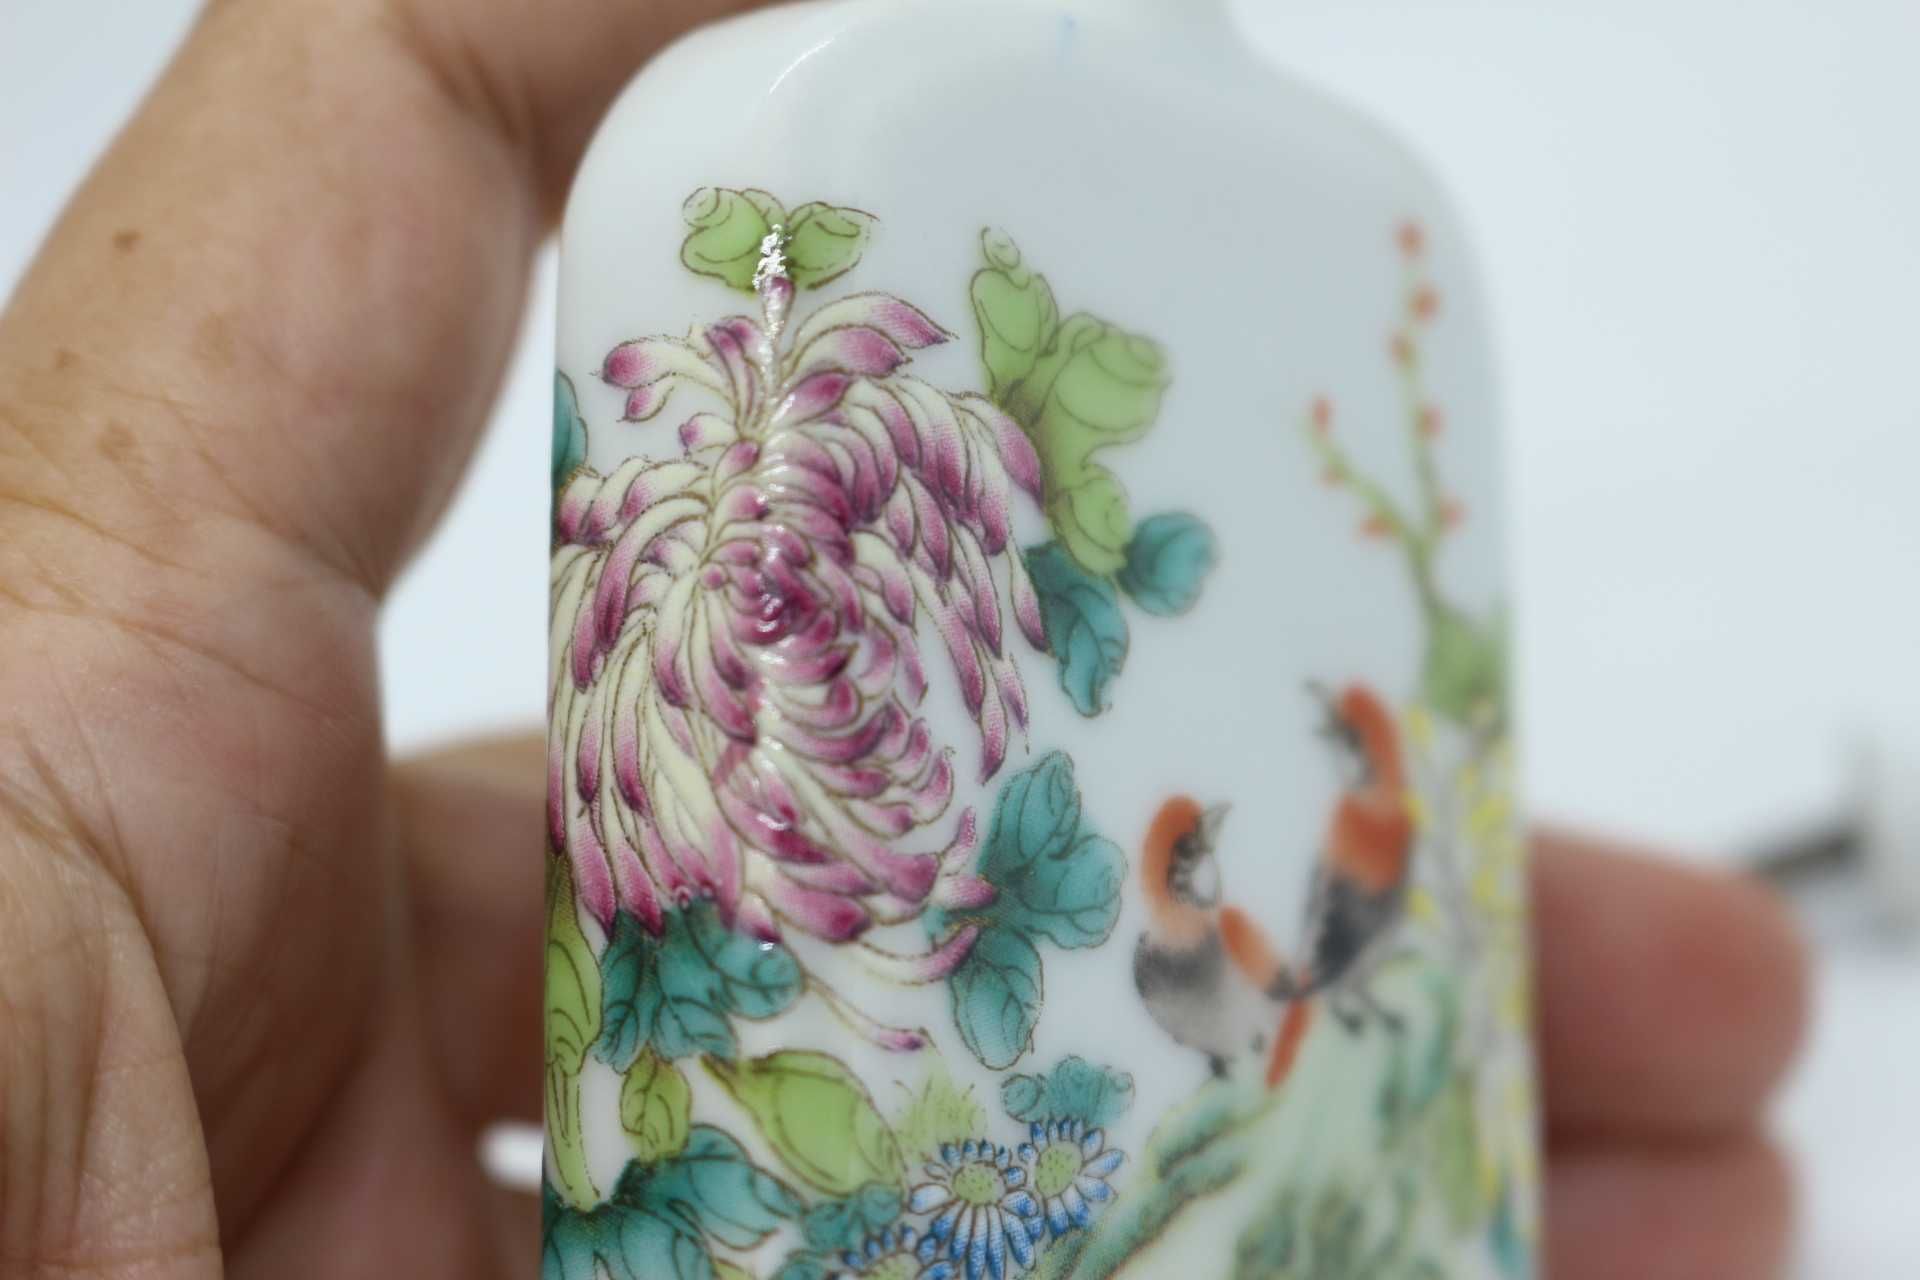 Snuff Bottle Porcelana Chinesa Família Rosa Kangxi Pássaros Flores mar